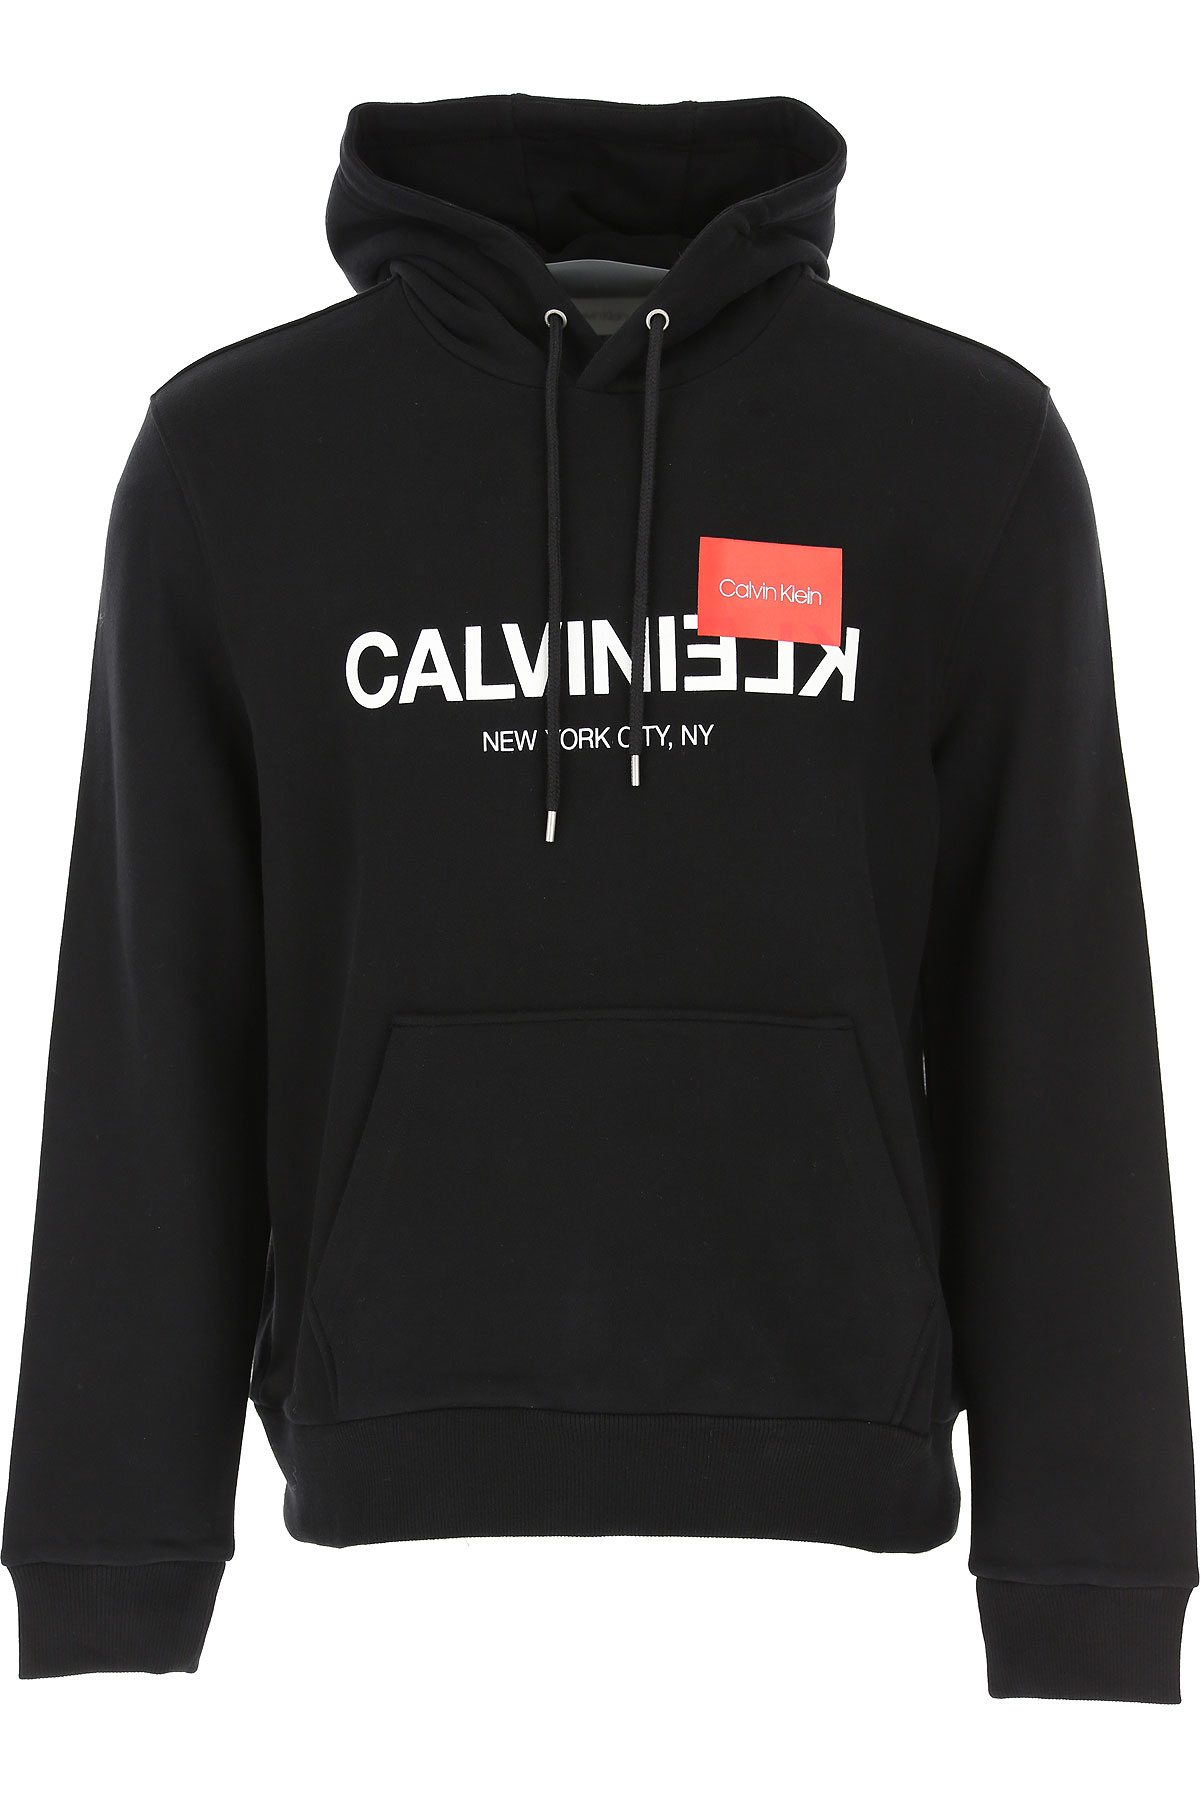 Mens Clothing Calvin Klein, Style code: k10k104702-bds-